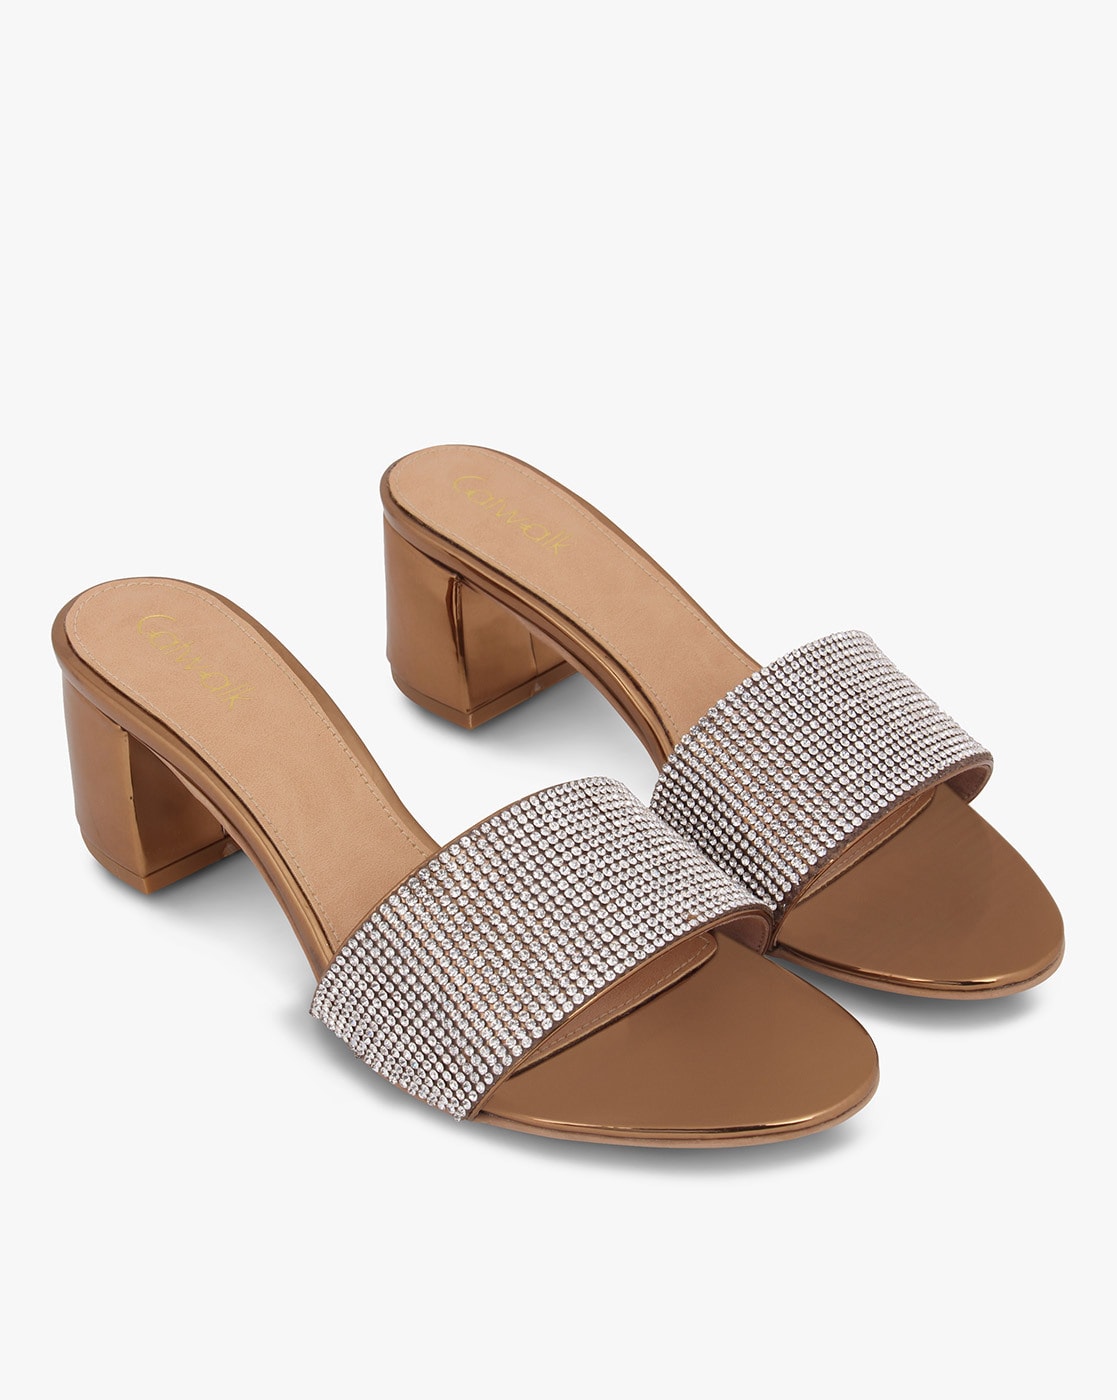 Catwalk Women's Bronze Fashion Sandals - 9 UK/India (41 EU)(3332BX) :  Amazon.in: Shoes & Handbags